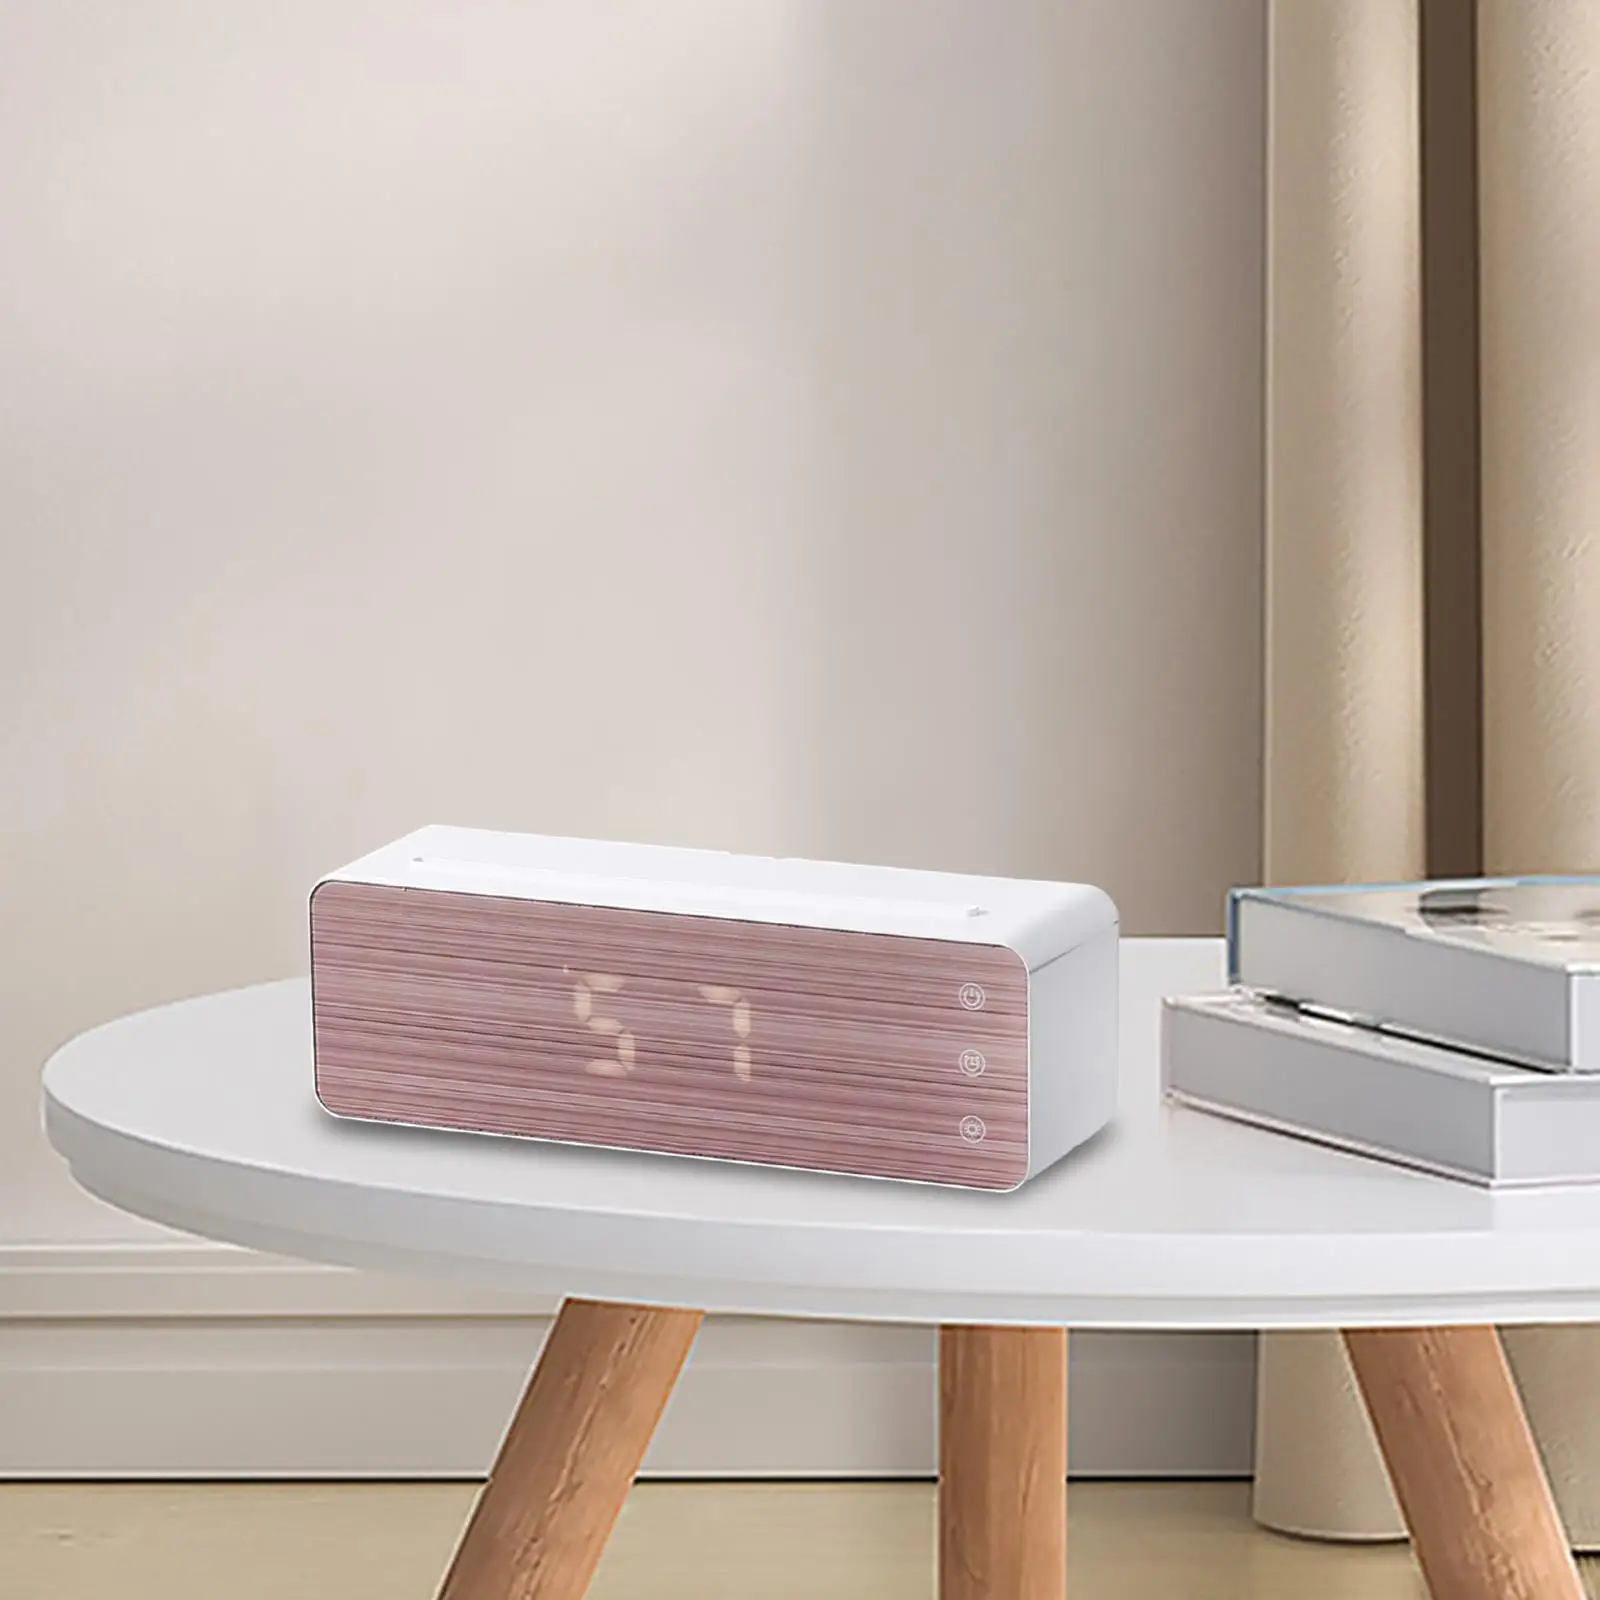 Essential Oil Diffuser Digital Clock Portable Simulated Wood Grain Panel Personal Humidifier for Bedroom Yoga SPA Bathroom Study